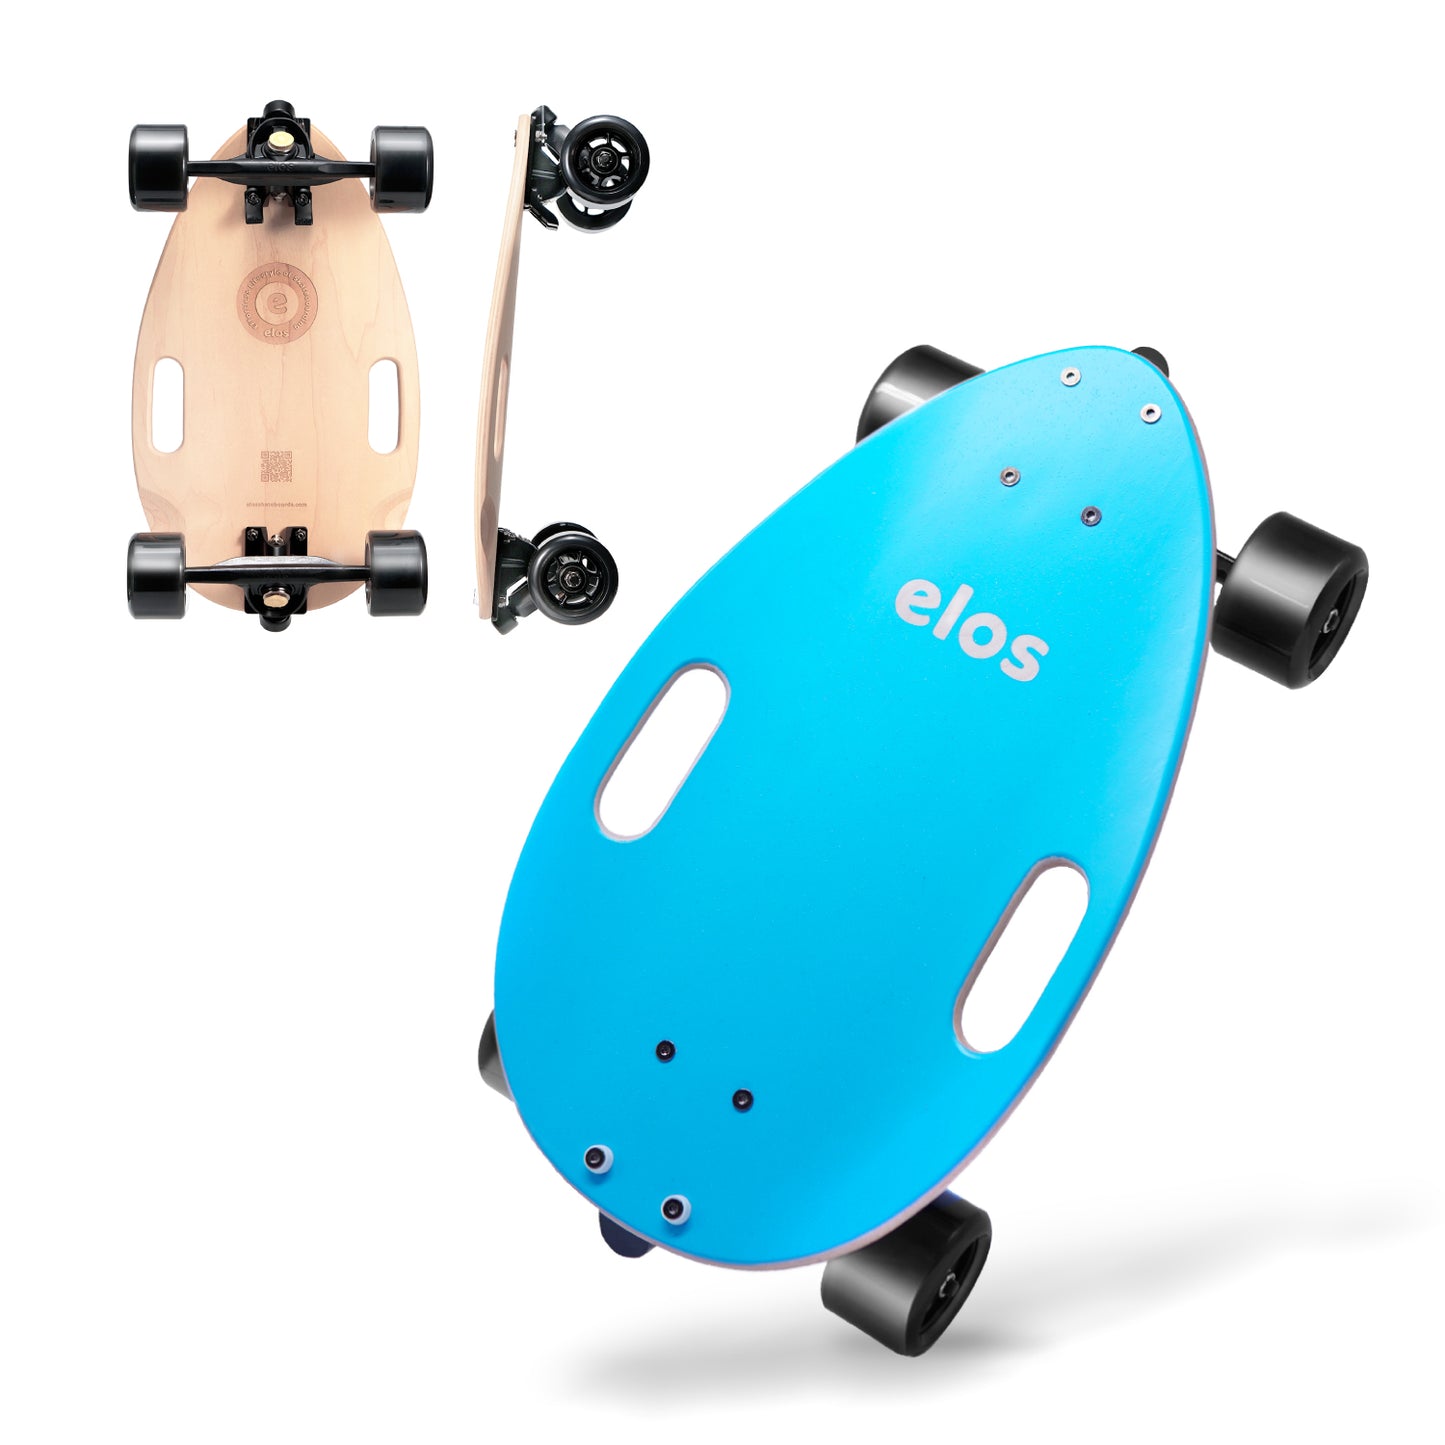 Elos都會滑板通勤款 代步交通滑板